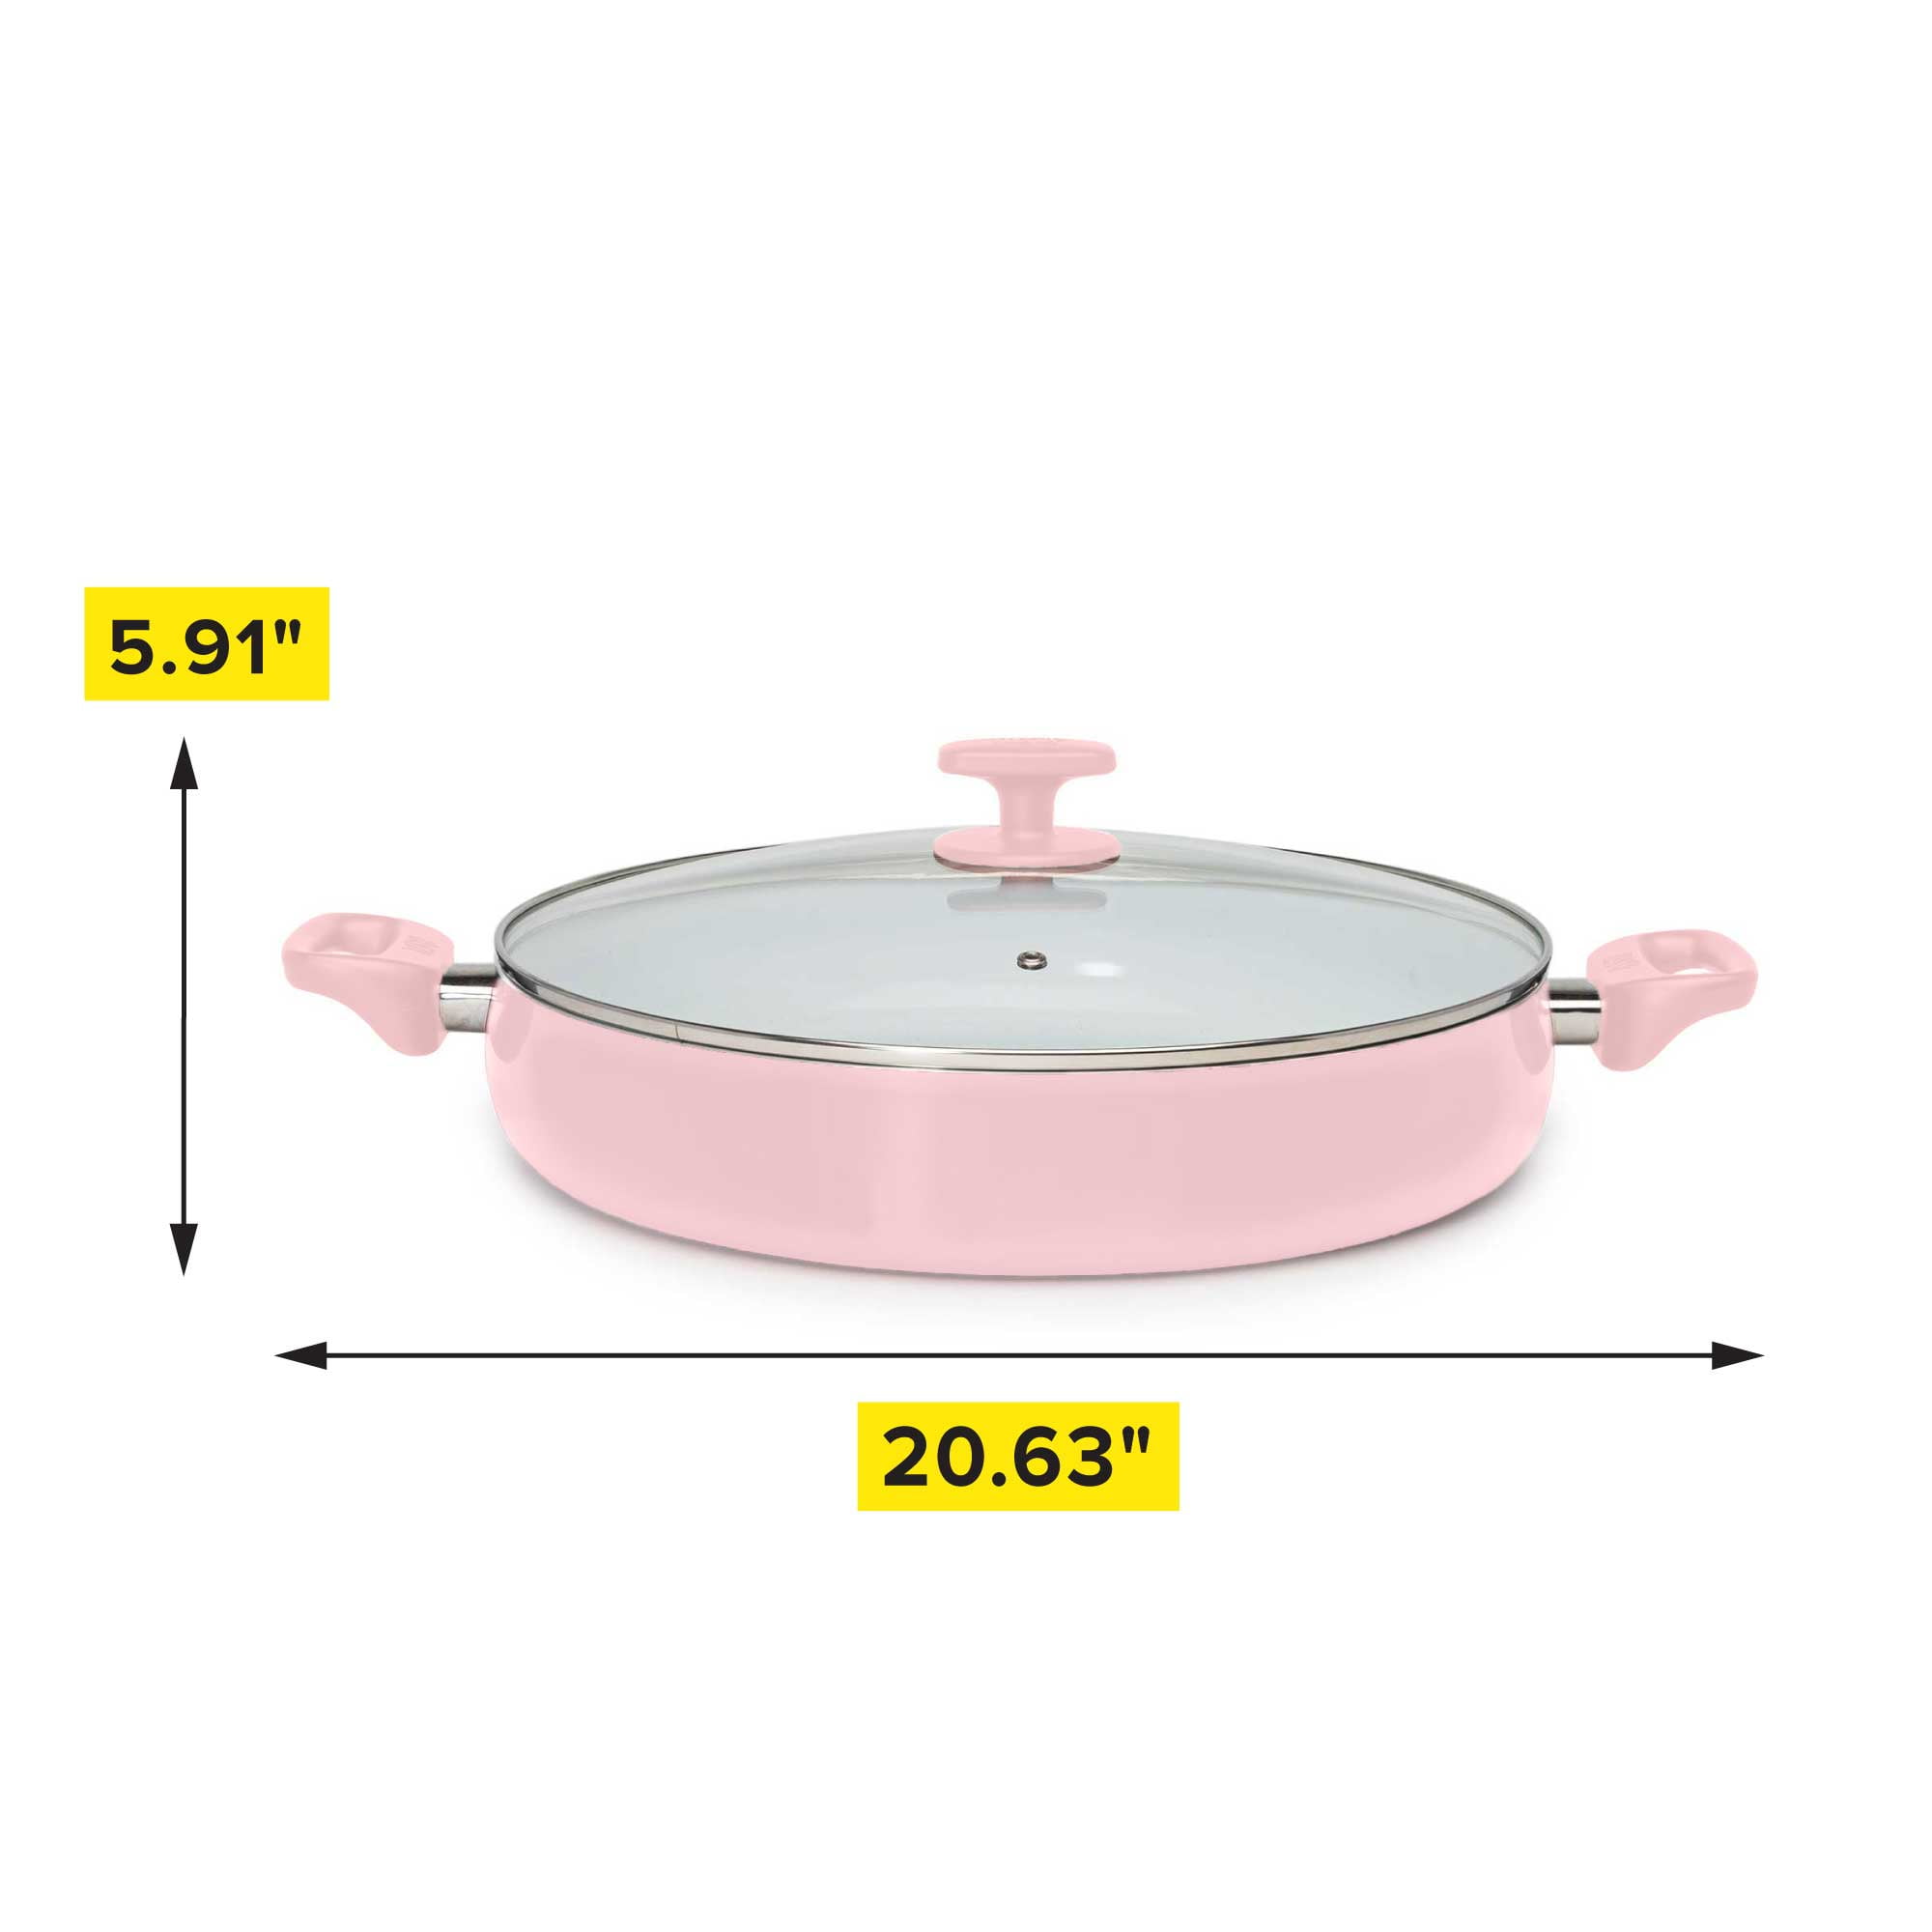  PYTKL Healthy Ceramic Nonstick, Cookware Pots And Pans Set, 14  Piece, Pink,Kitchen Accessories : Home & Kitchen